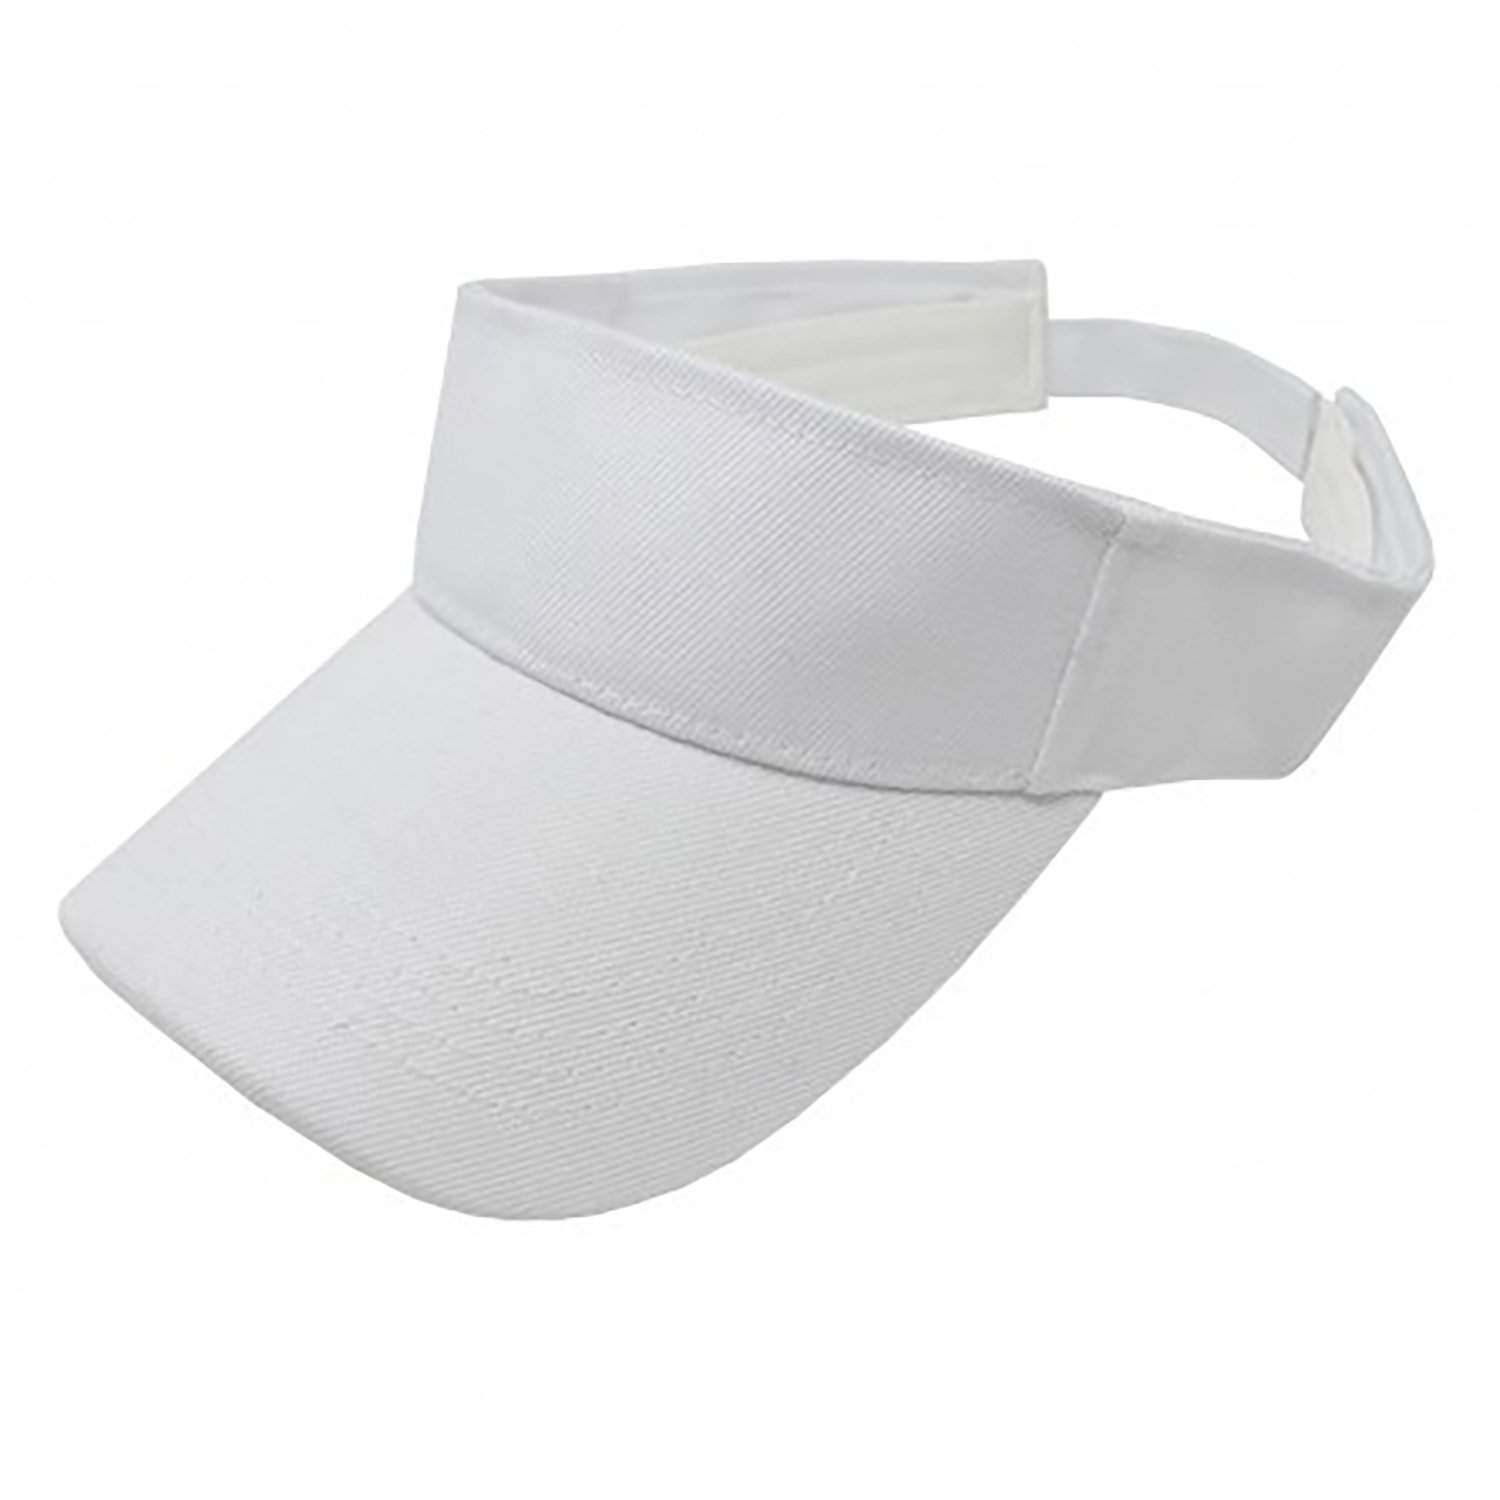 Qraftsy Sun Visor Adjustable Cap Hat Athletic Wear